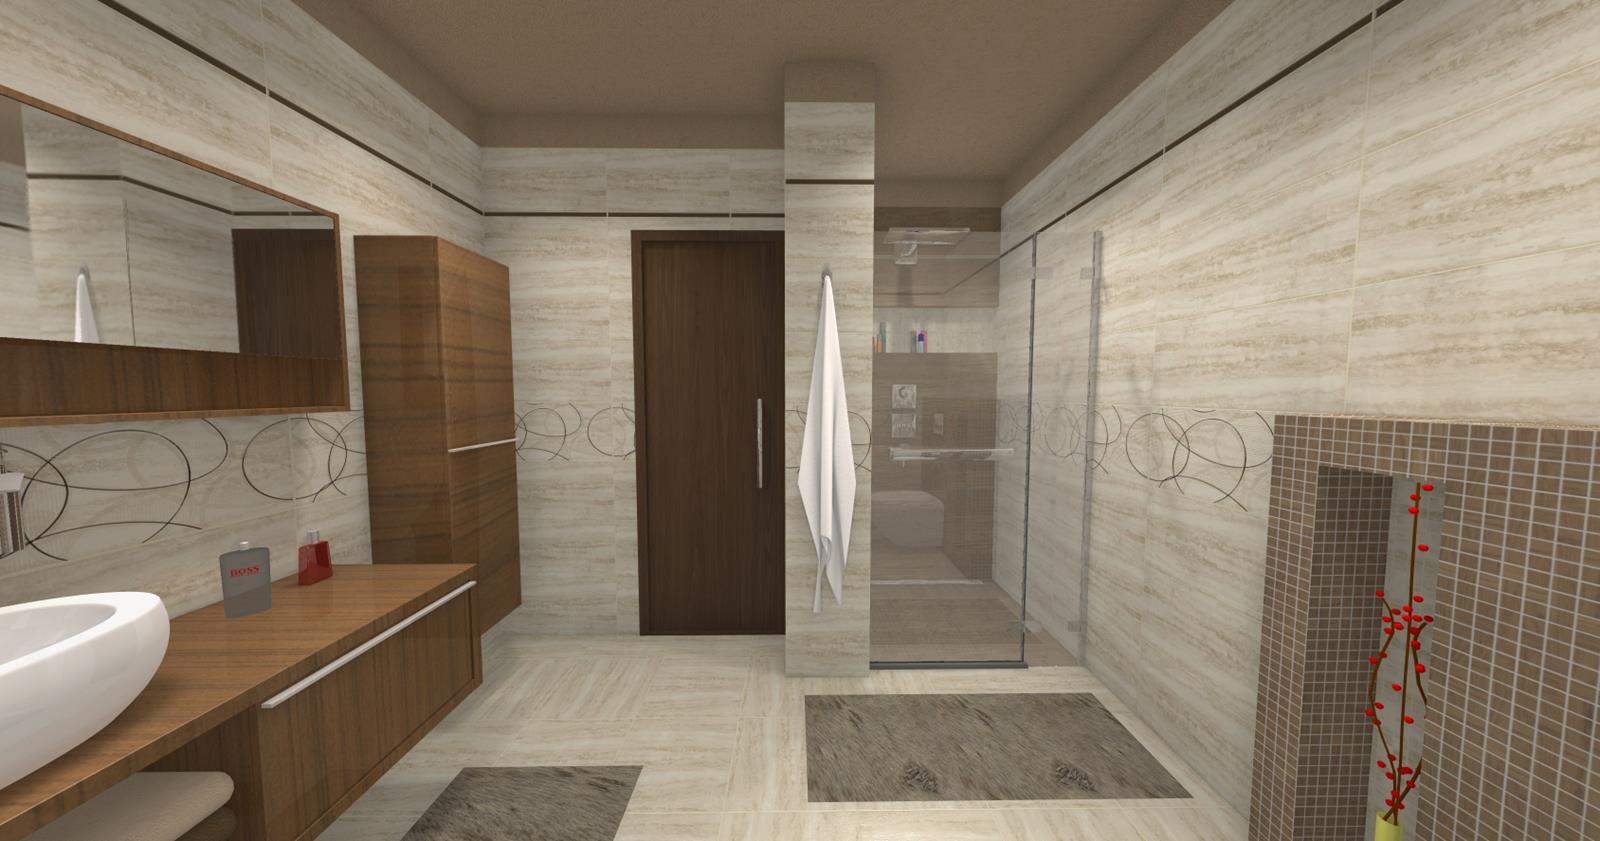 Luxusná elegantná kúpeľňa - hnedá